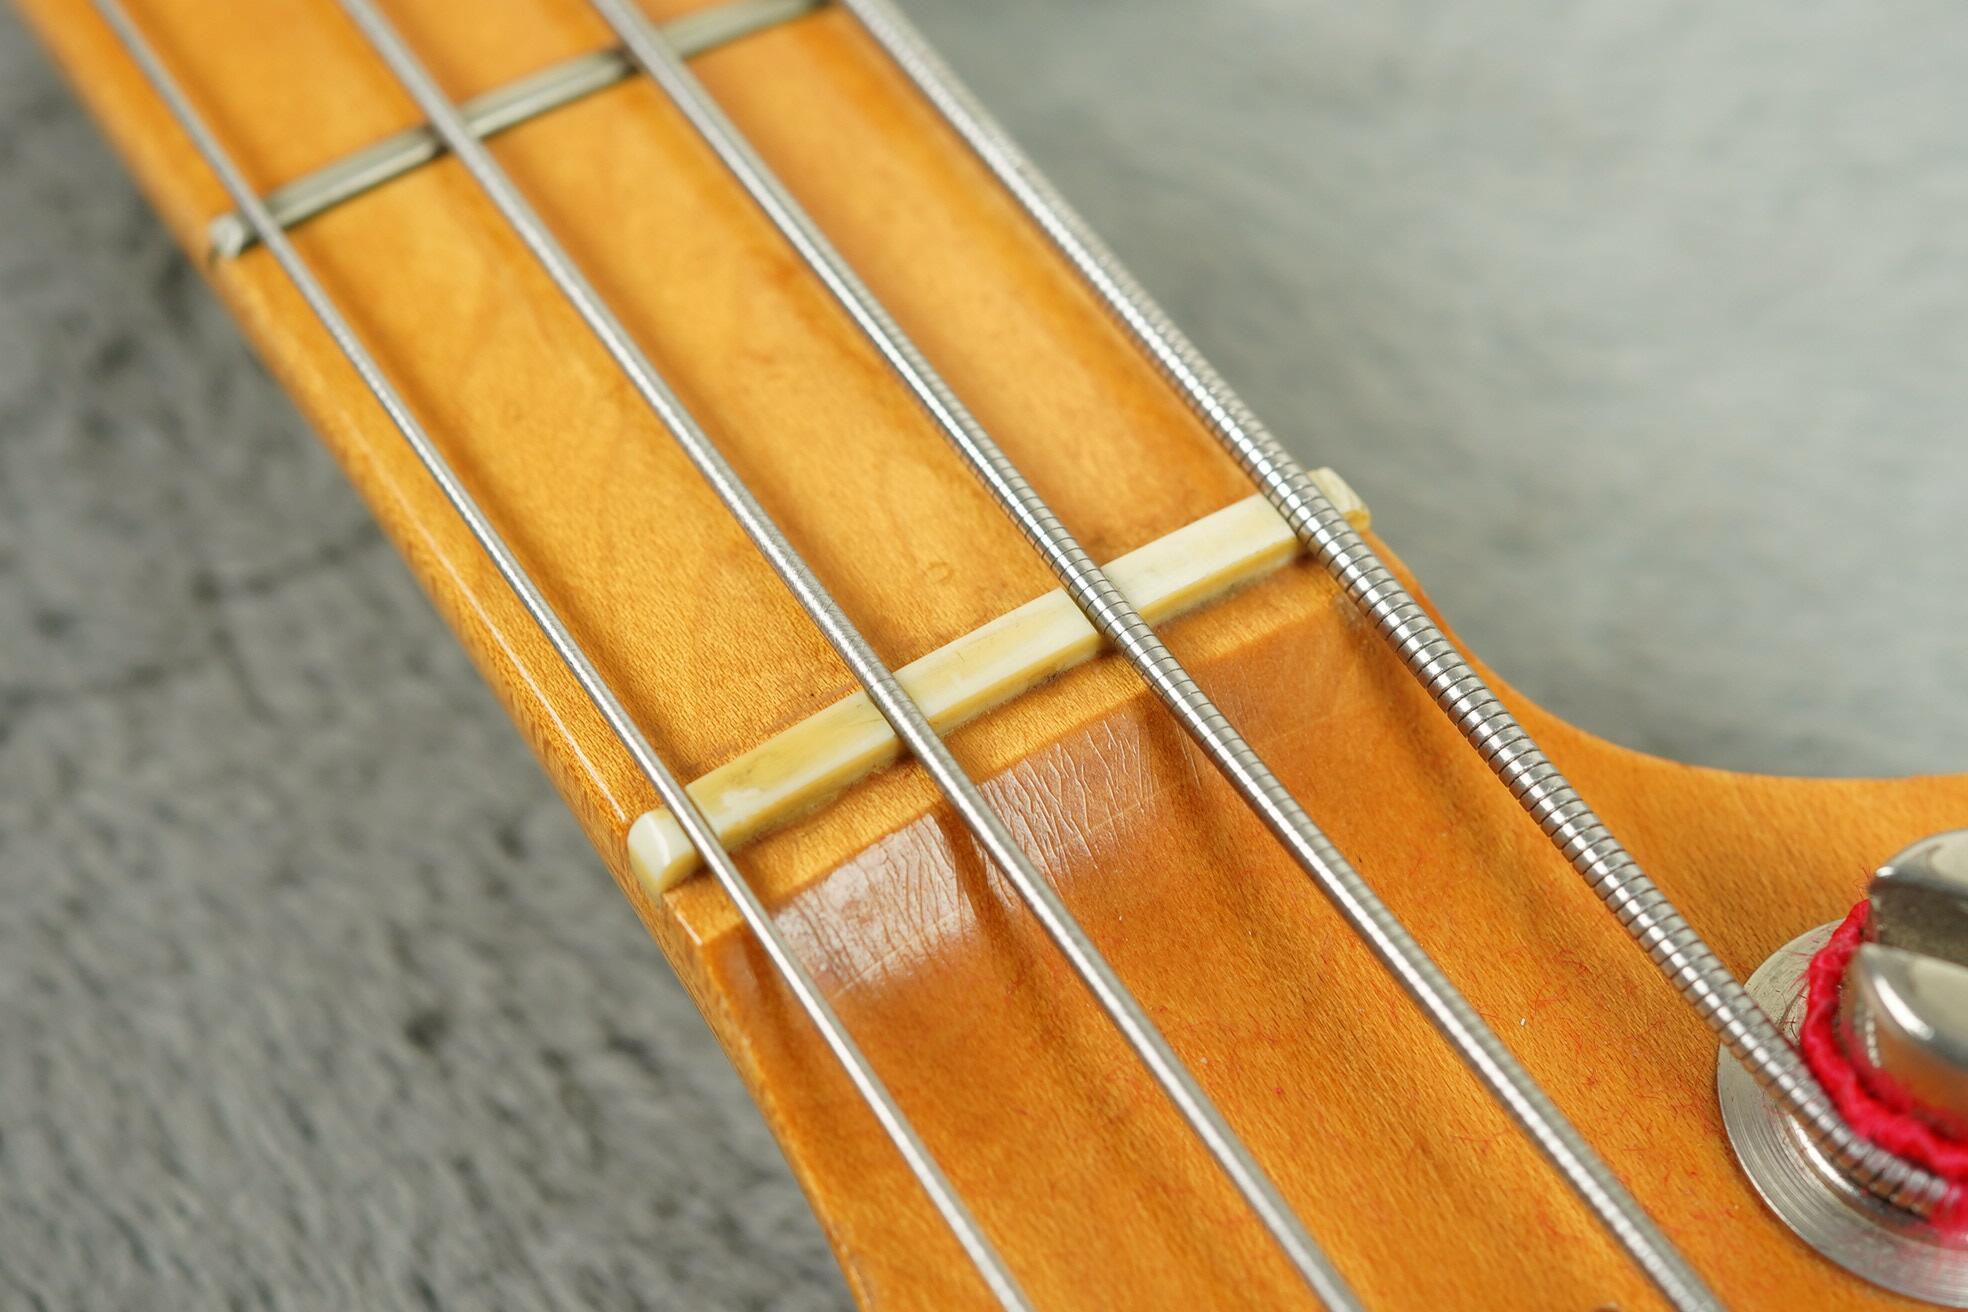 1967 Fender Precision Bass Slab Body Blonde